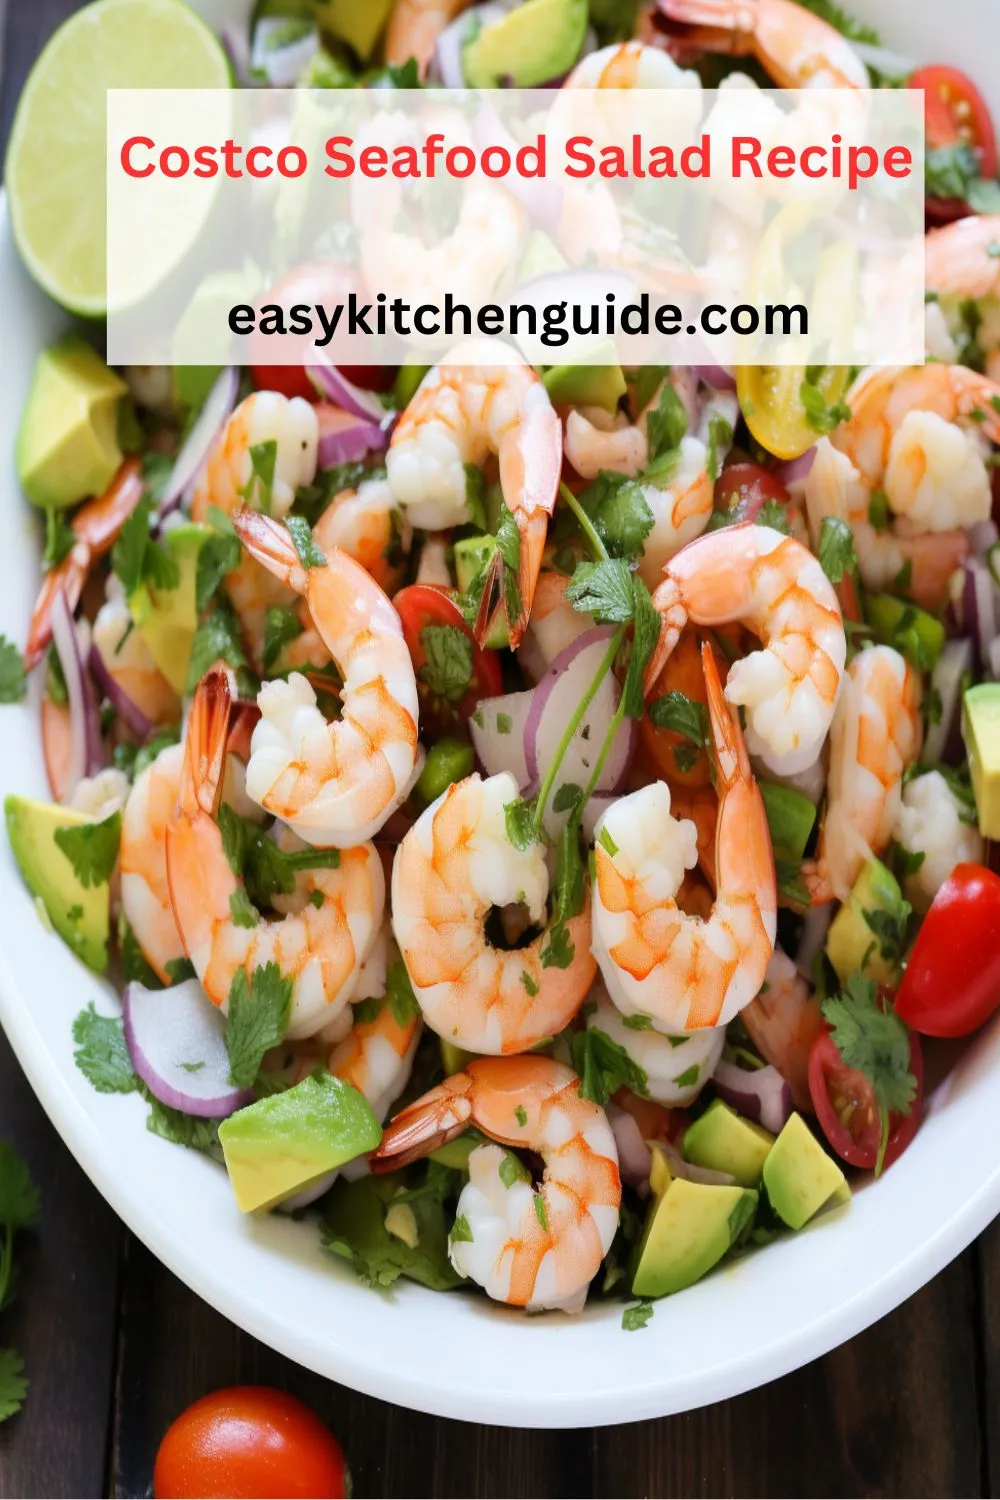 Costco-Seafood-Salad-Recipe